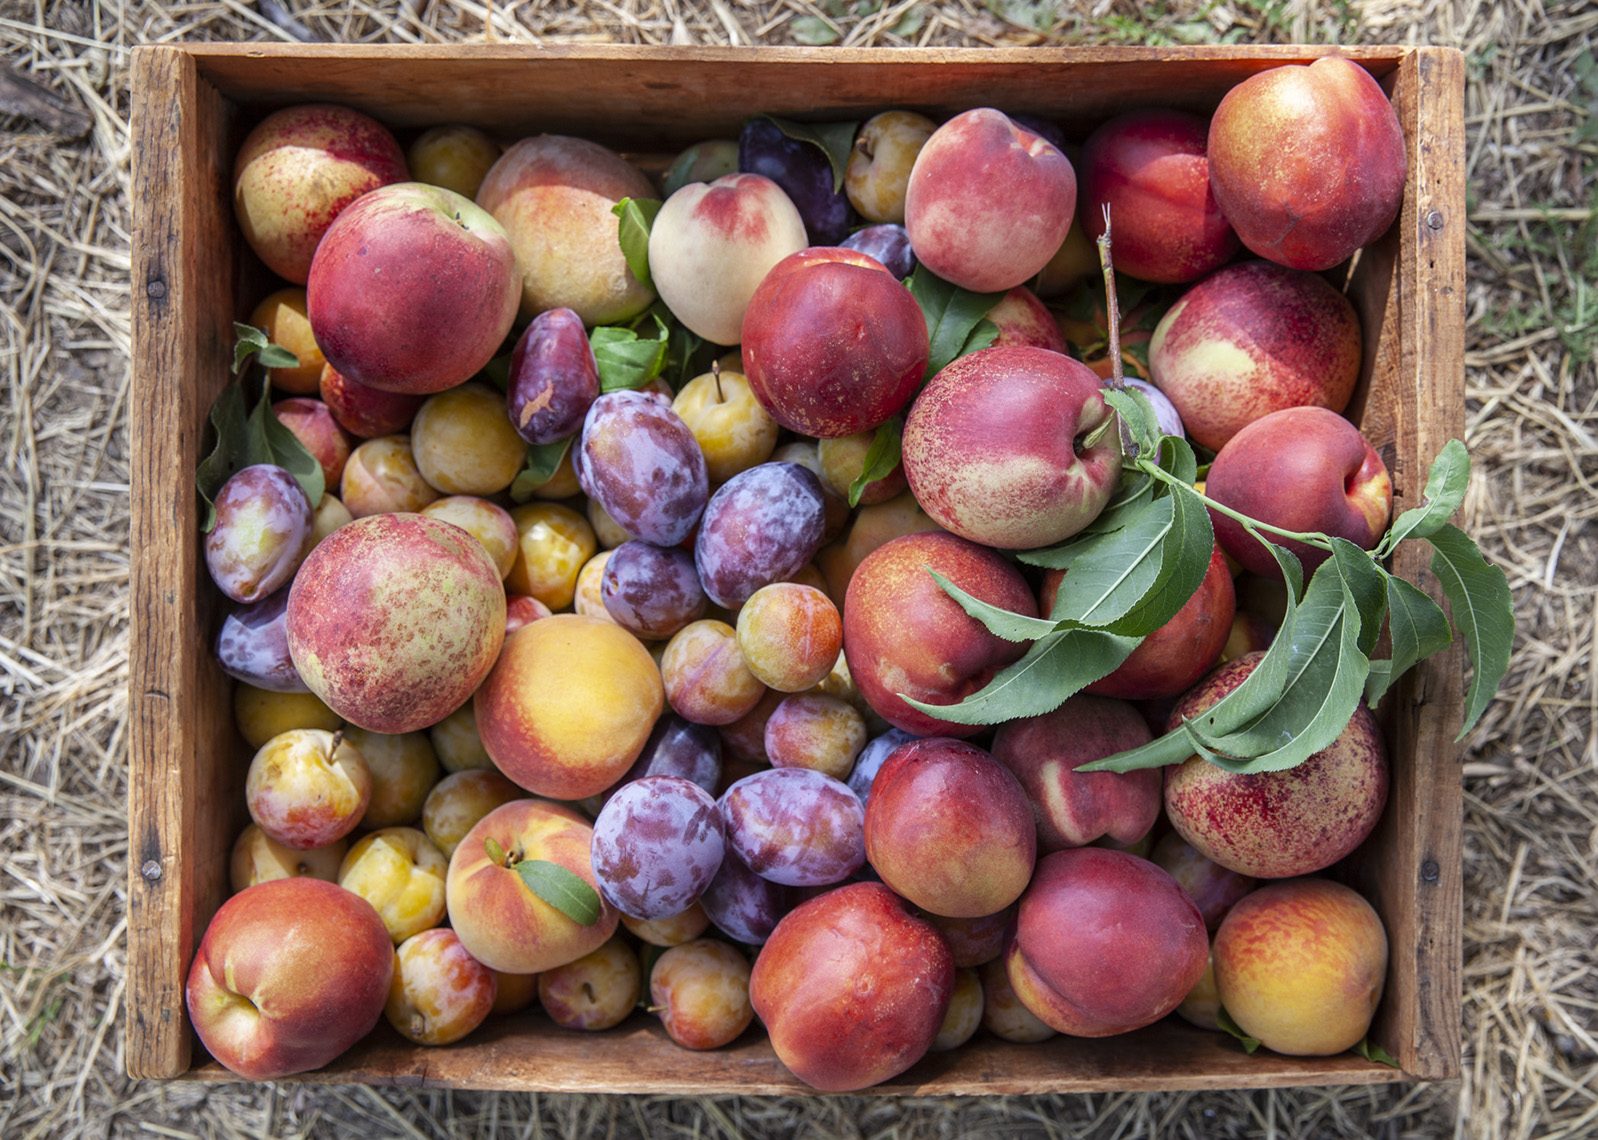 Box of Organic Stone Fruit from Bera Farms in Winters, California.